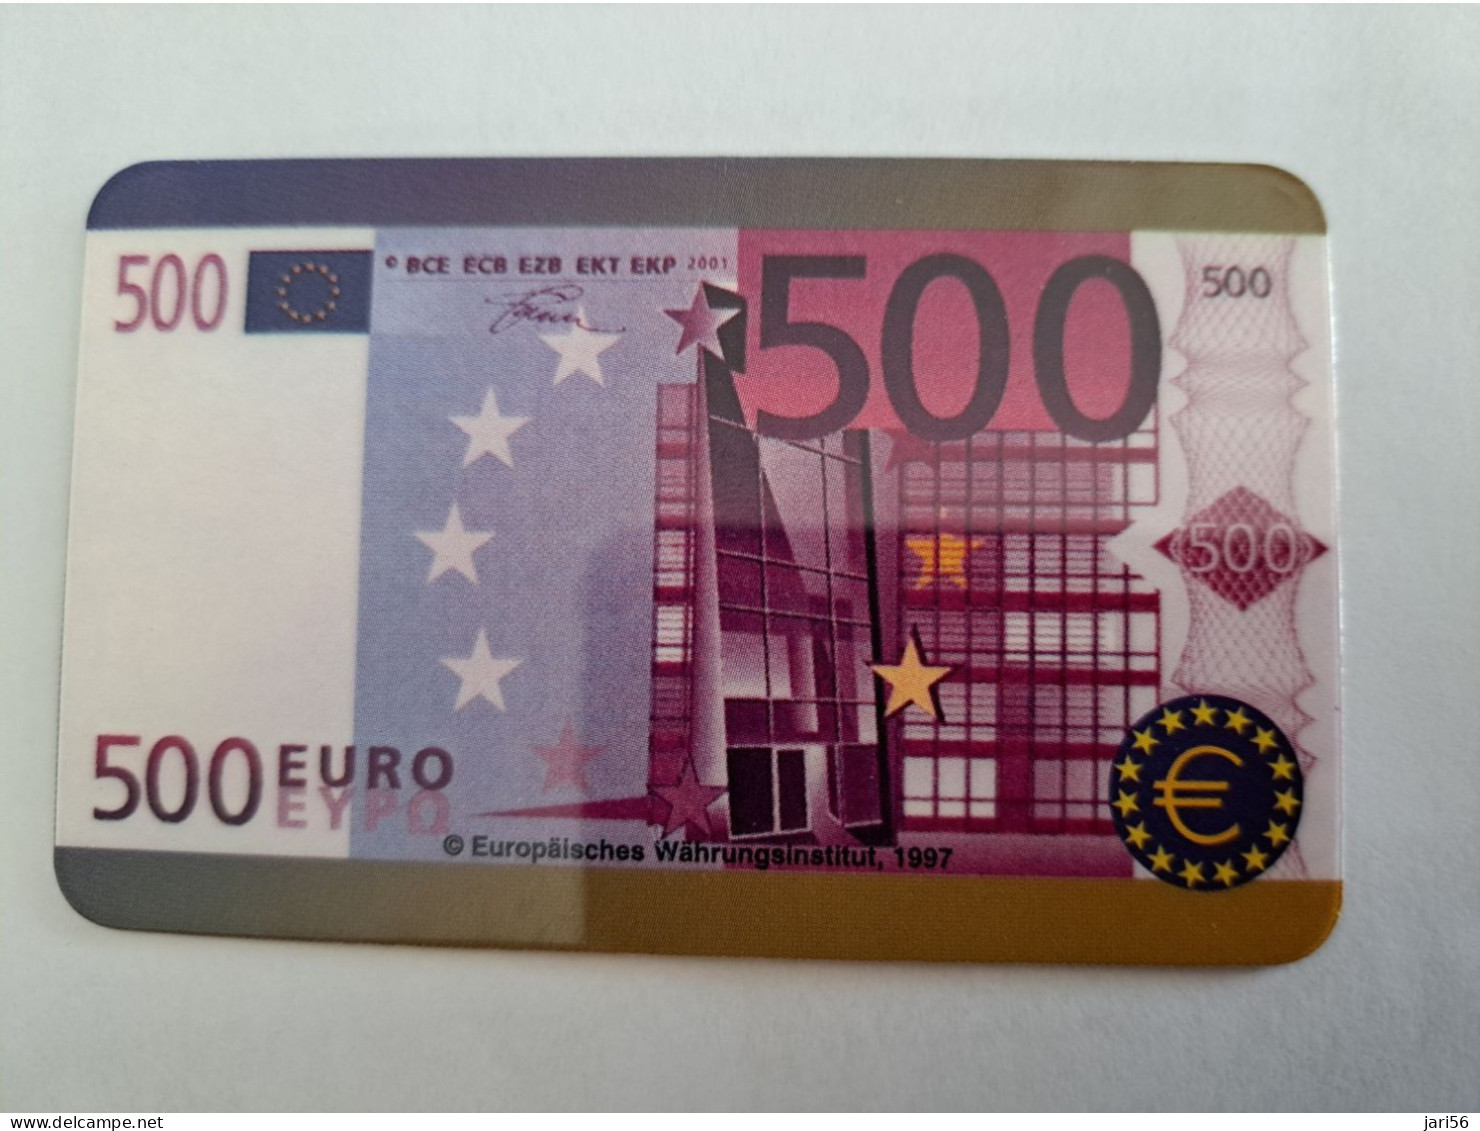 GREAT BRITAIN   20 UNITS   / EURO COINS/ BILJET 500 EURO    (date 09/98)  PREPAID CARD / MINT      **13302** - [10] Colecciones